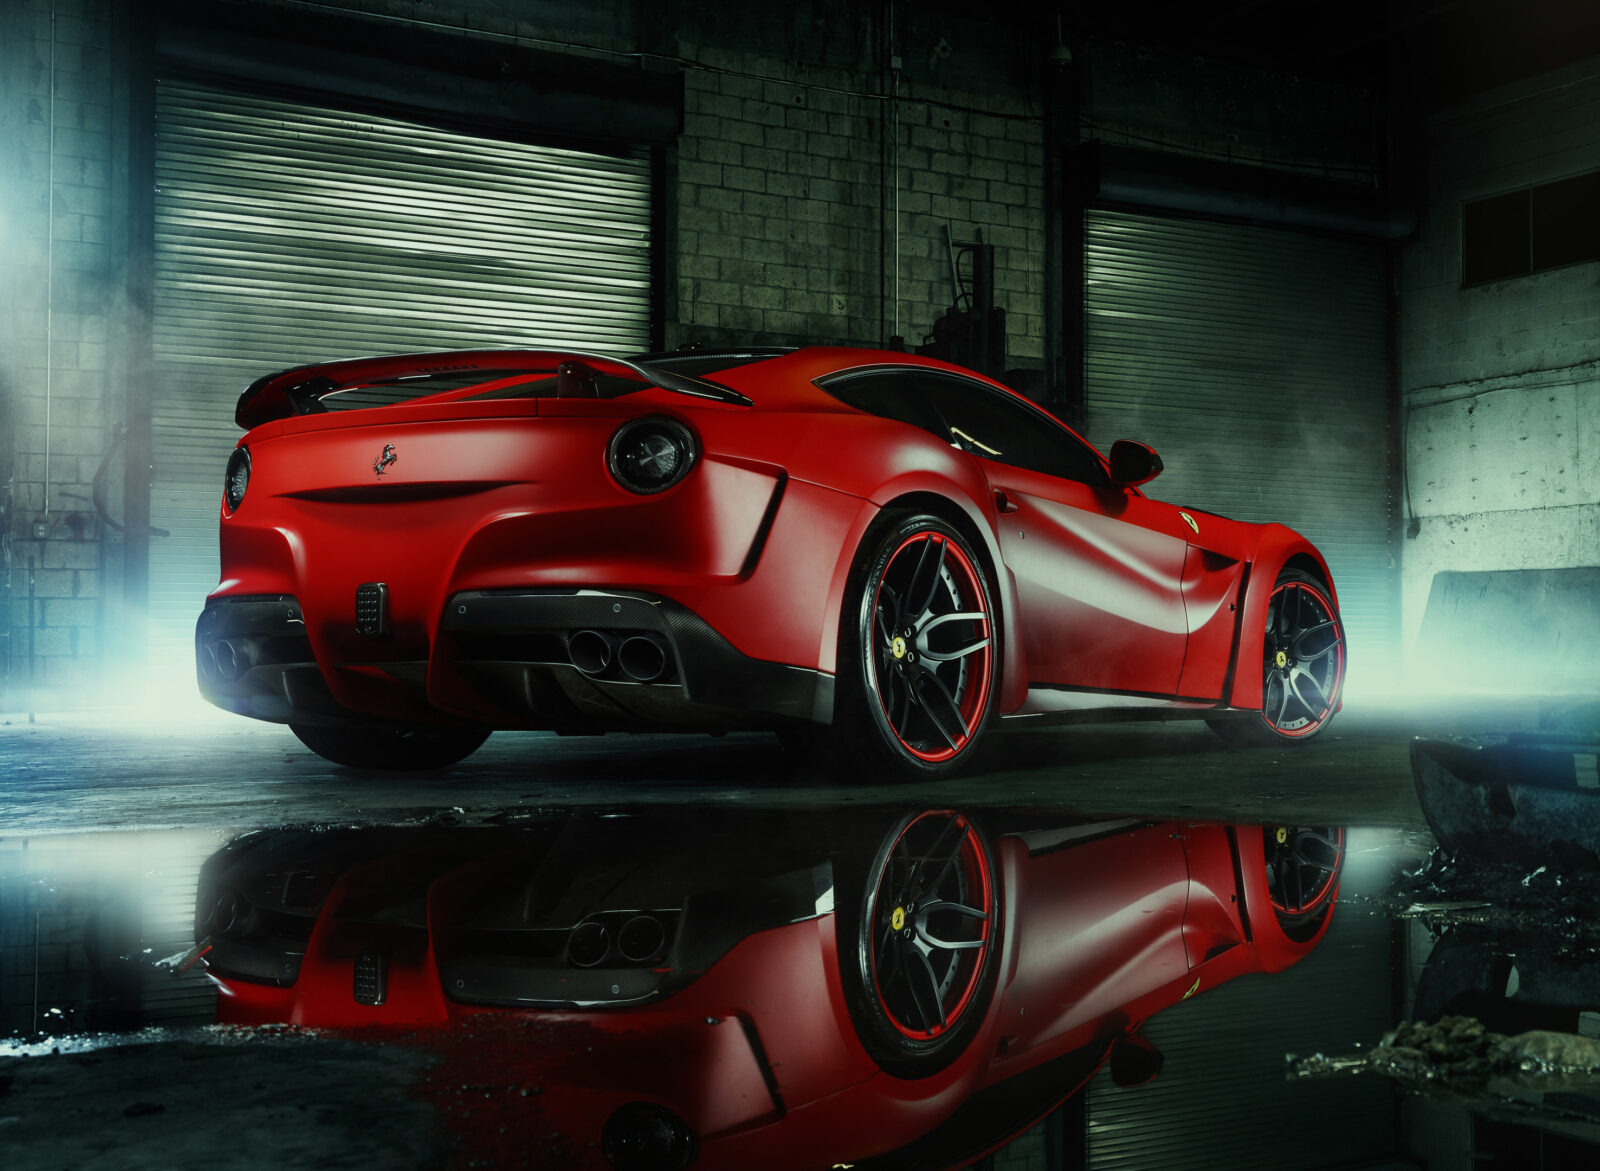 High-resolution Ferrari car image